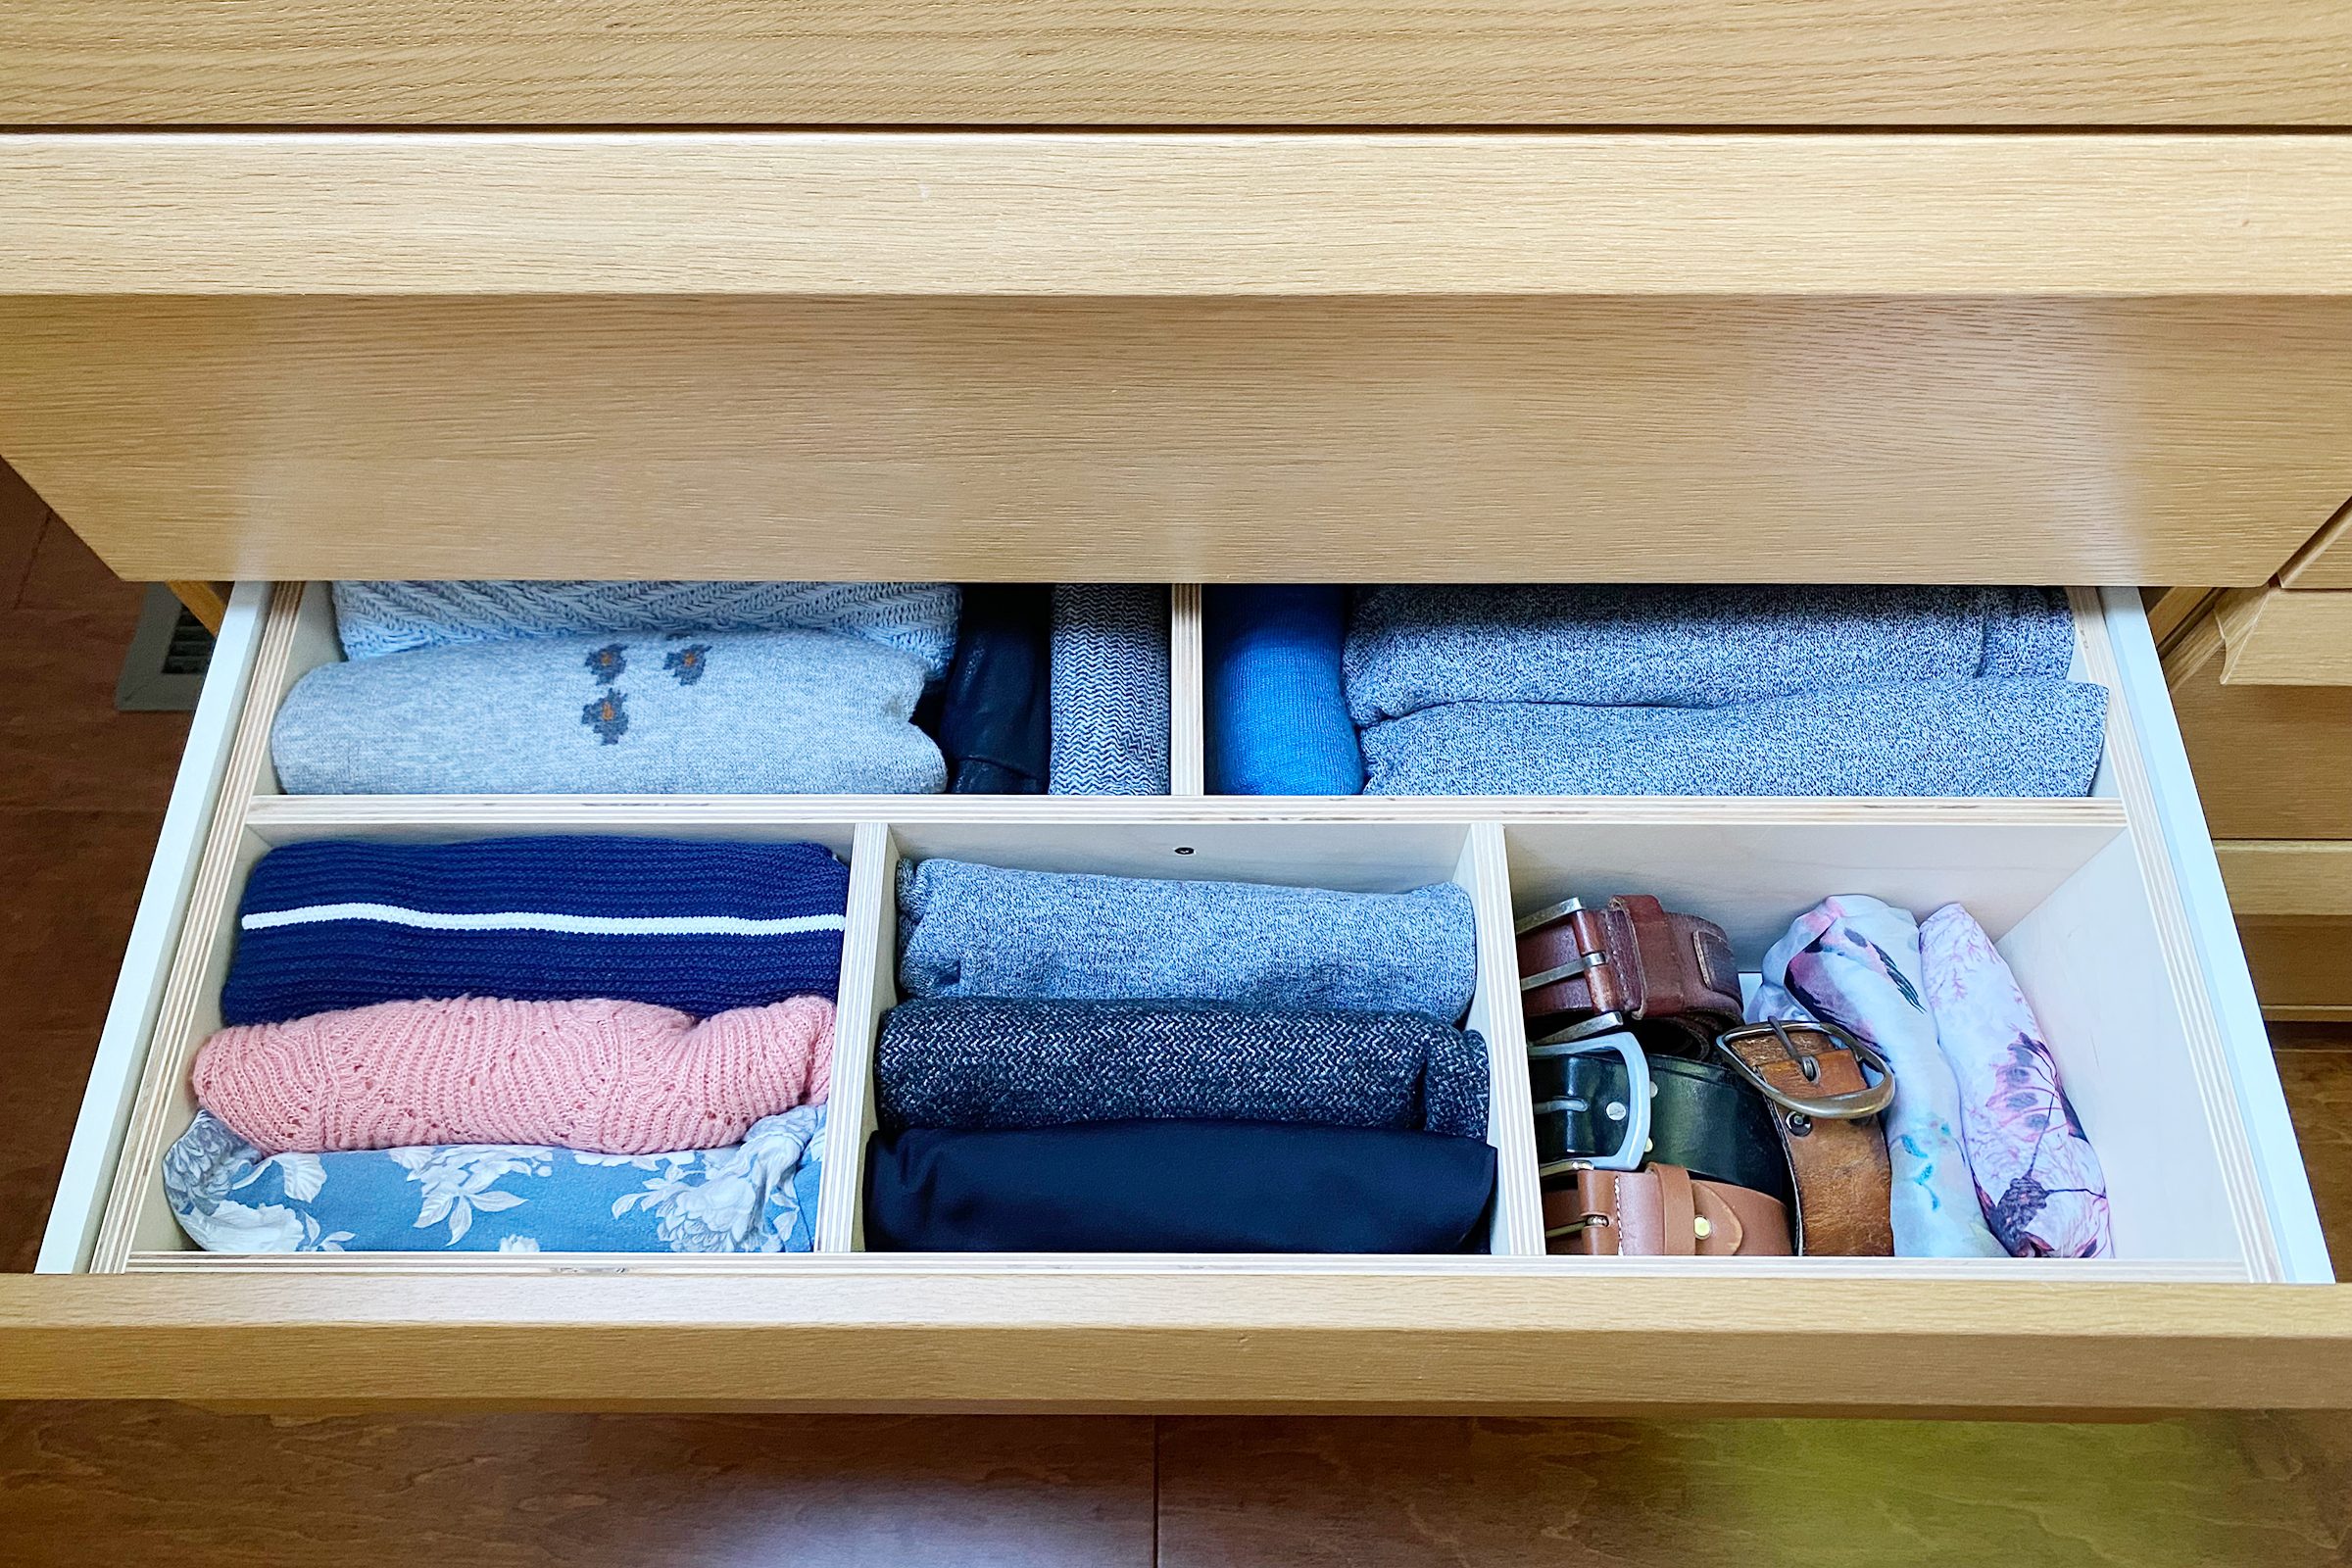 Build your own drawer organizer